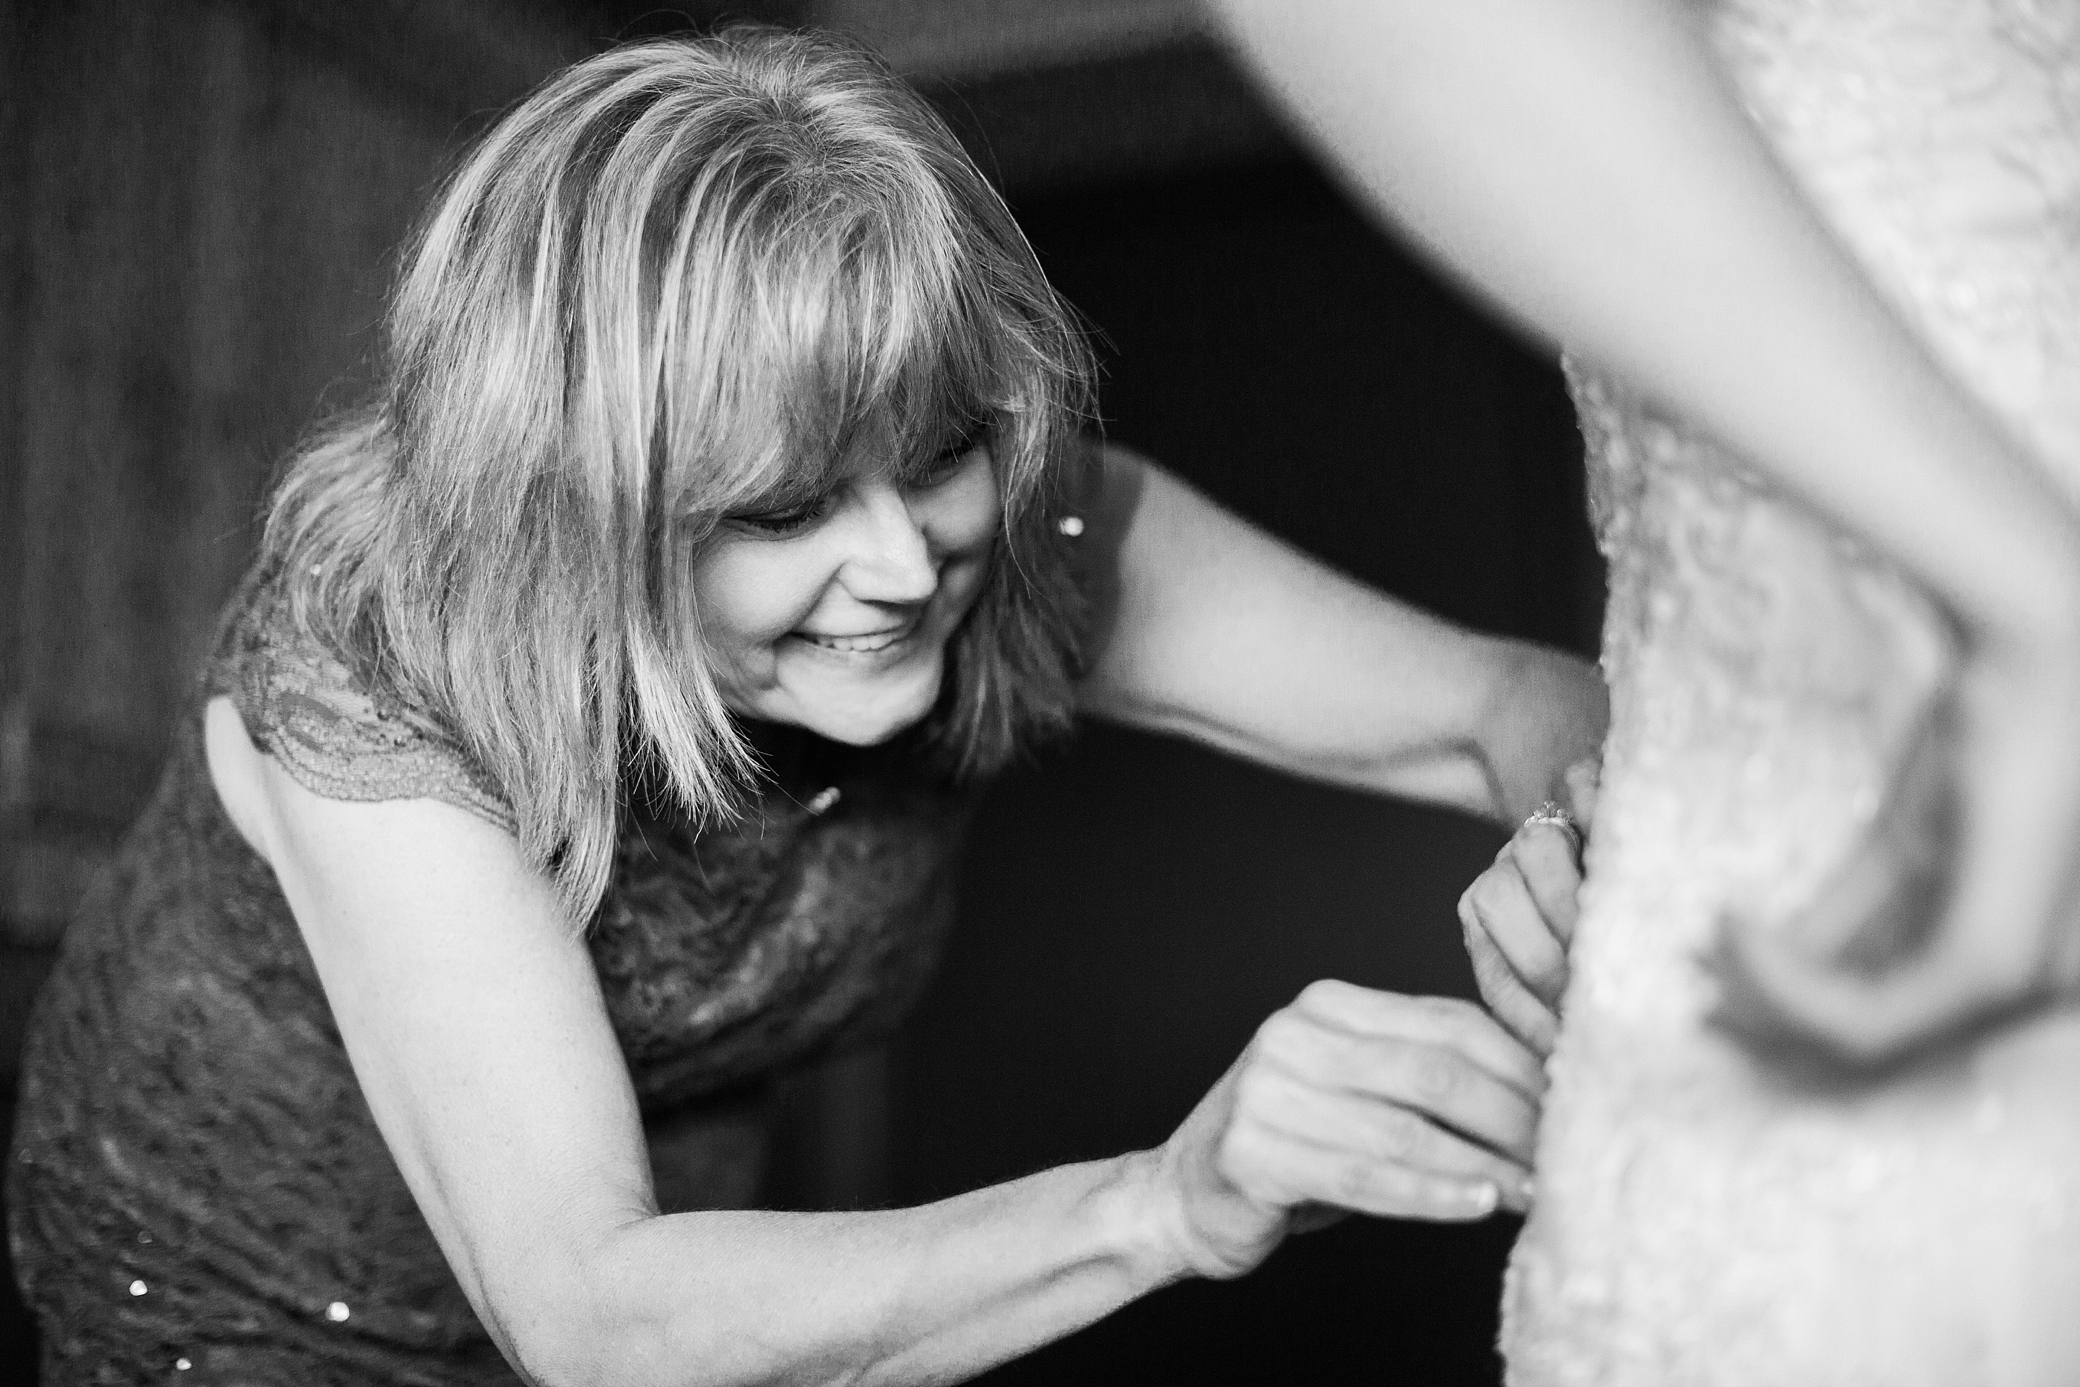 Bride getting dressed | Megan Montalvo Photography 